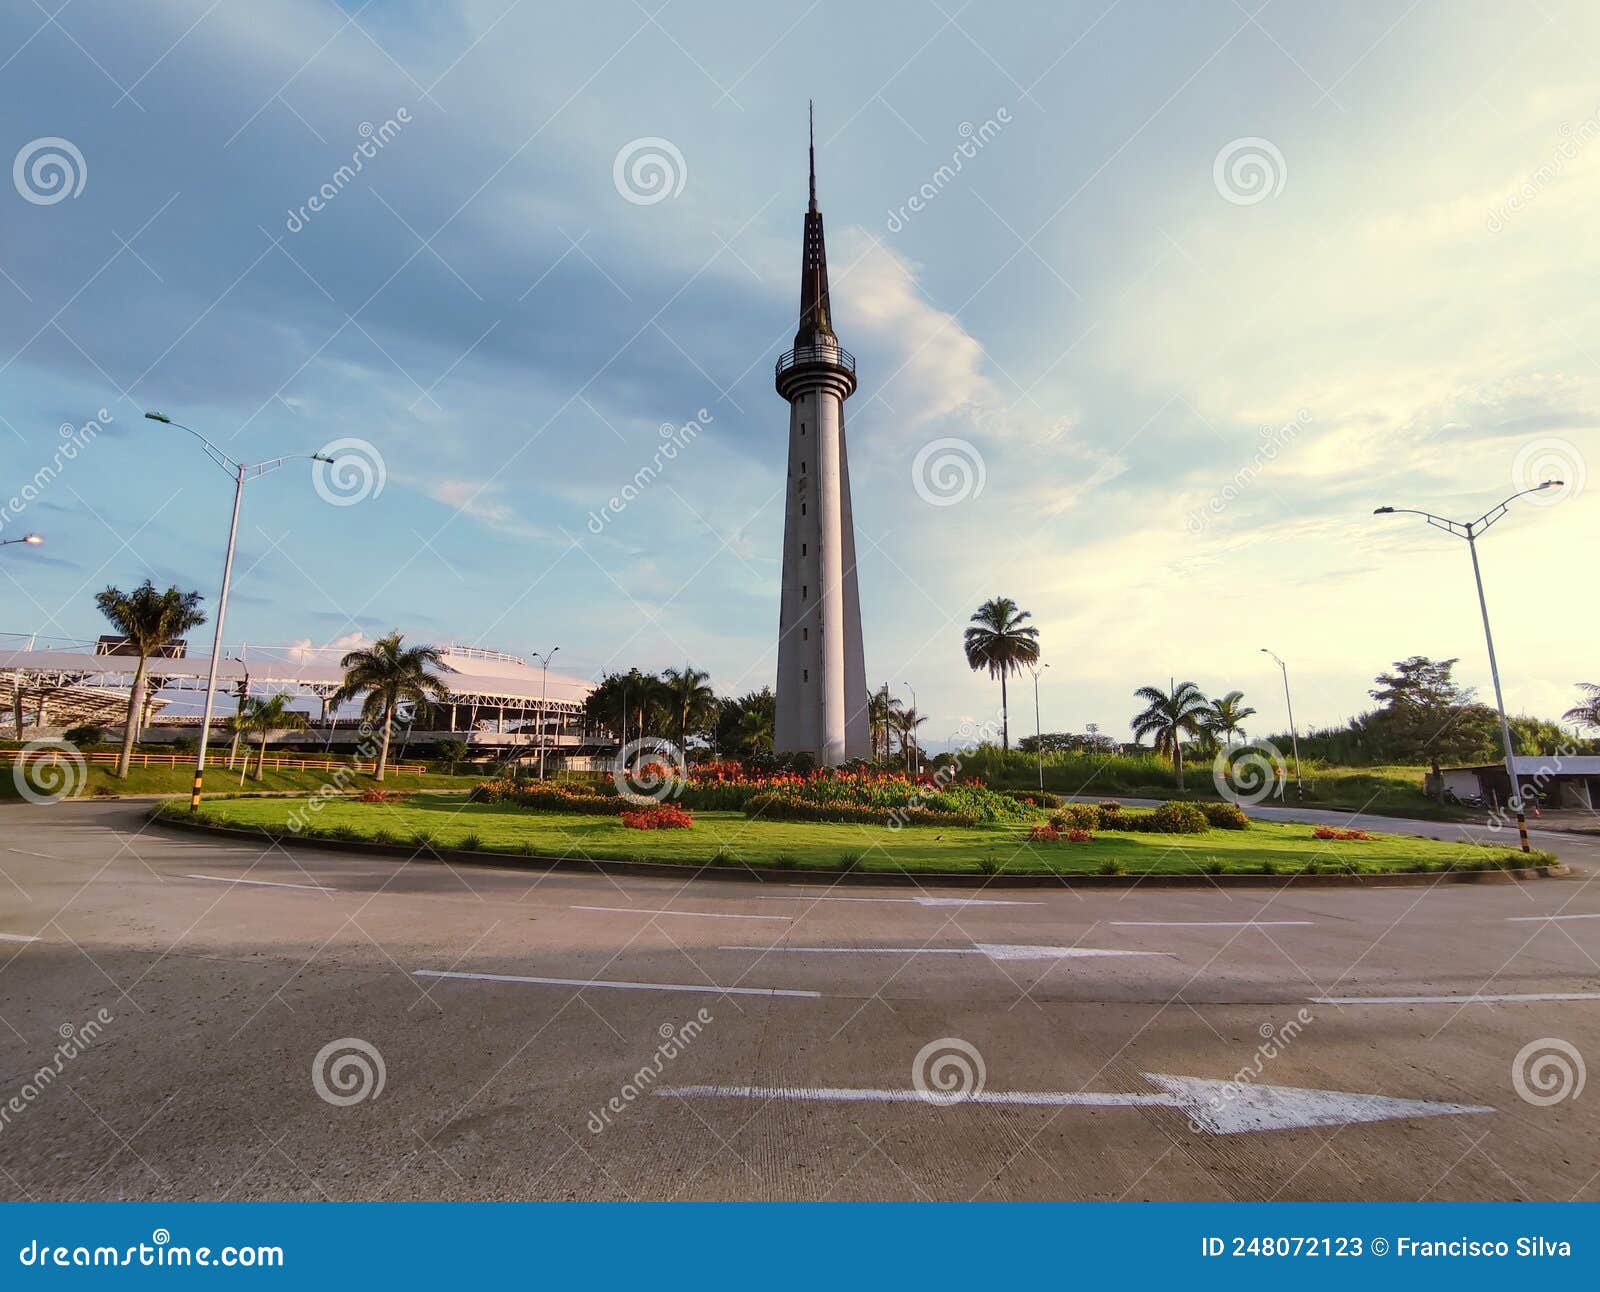 obelisk estadium hernan ramirez villegas pereira, risaralda, colombia